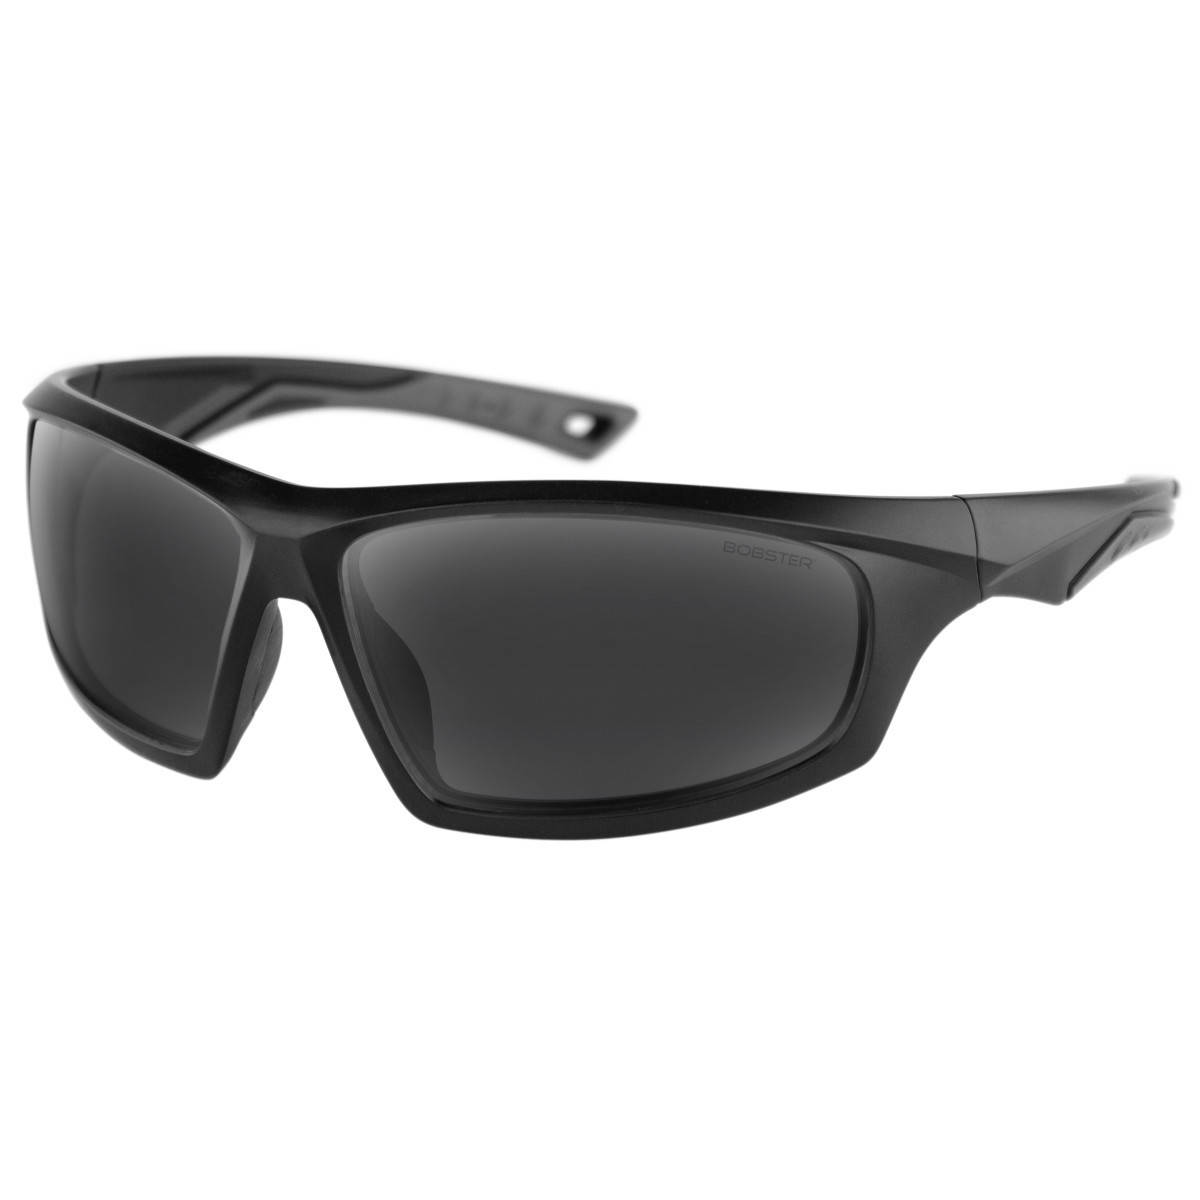 Bobster Mens Anchor Polarized Sunglasses,OS,Black/Smoke